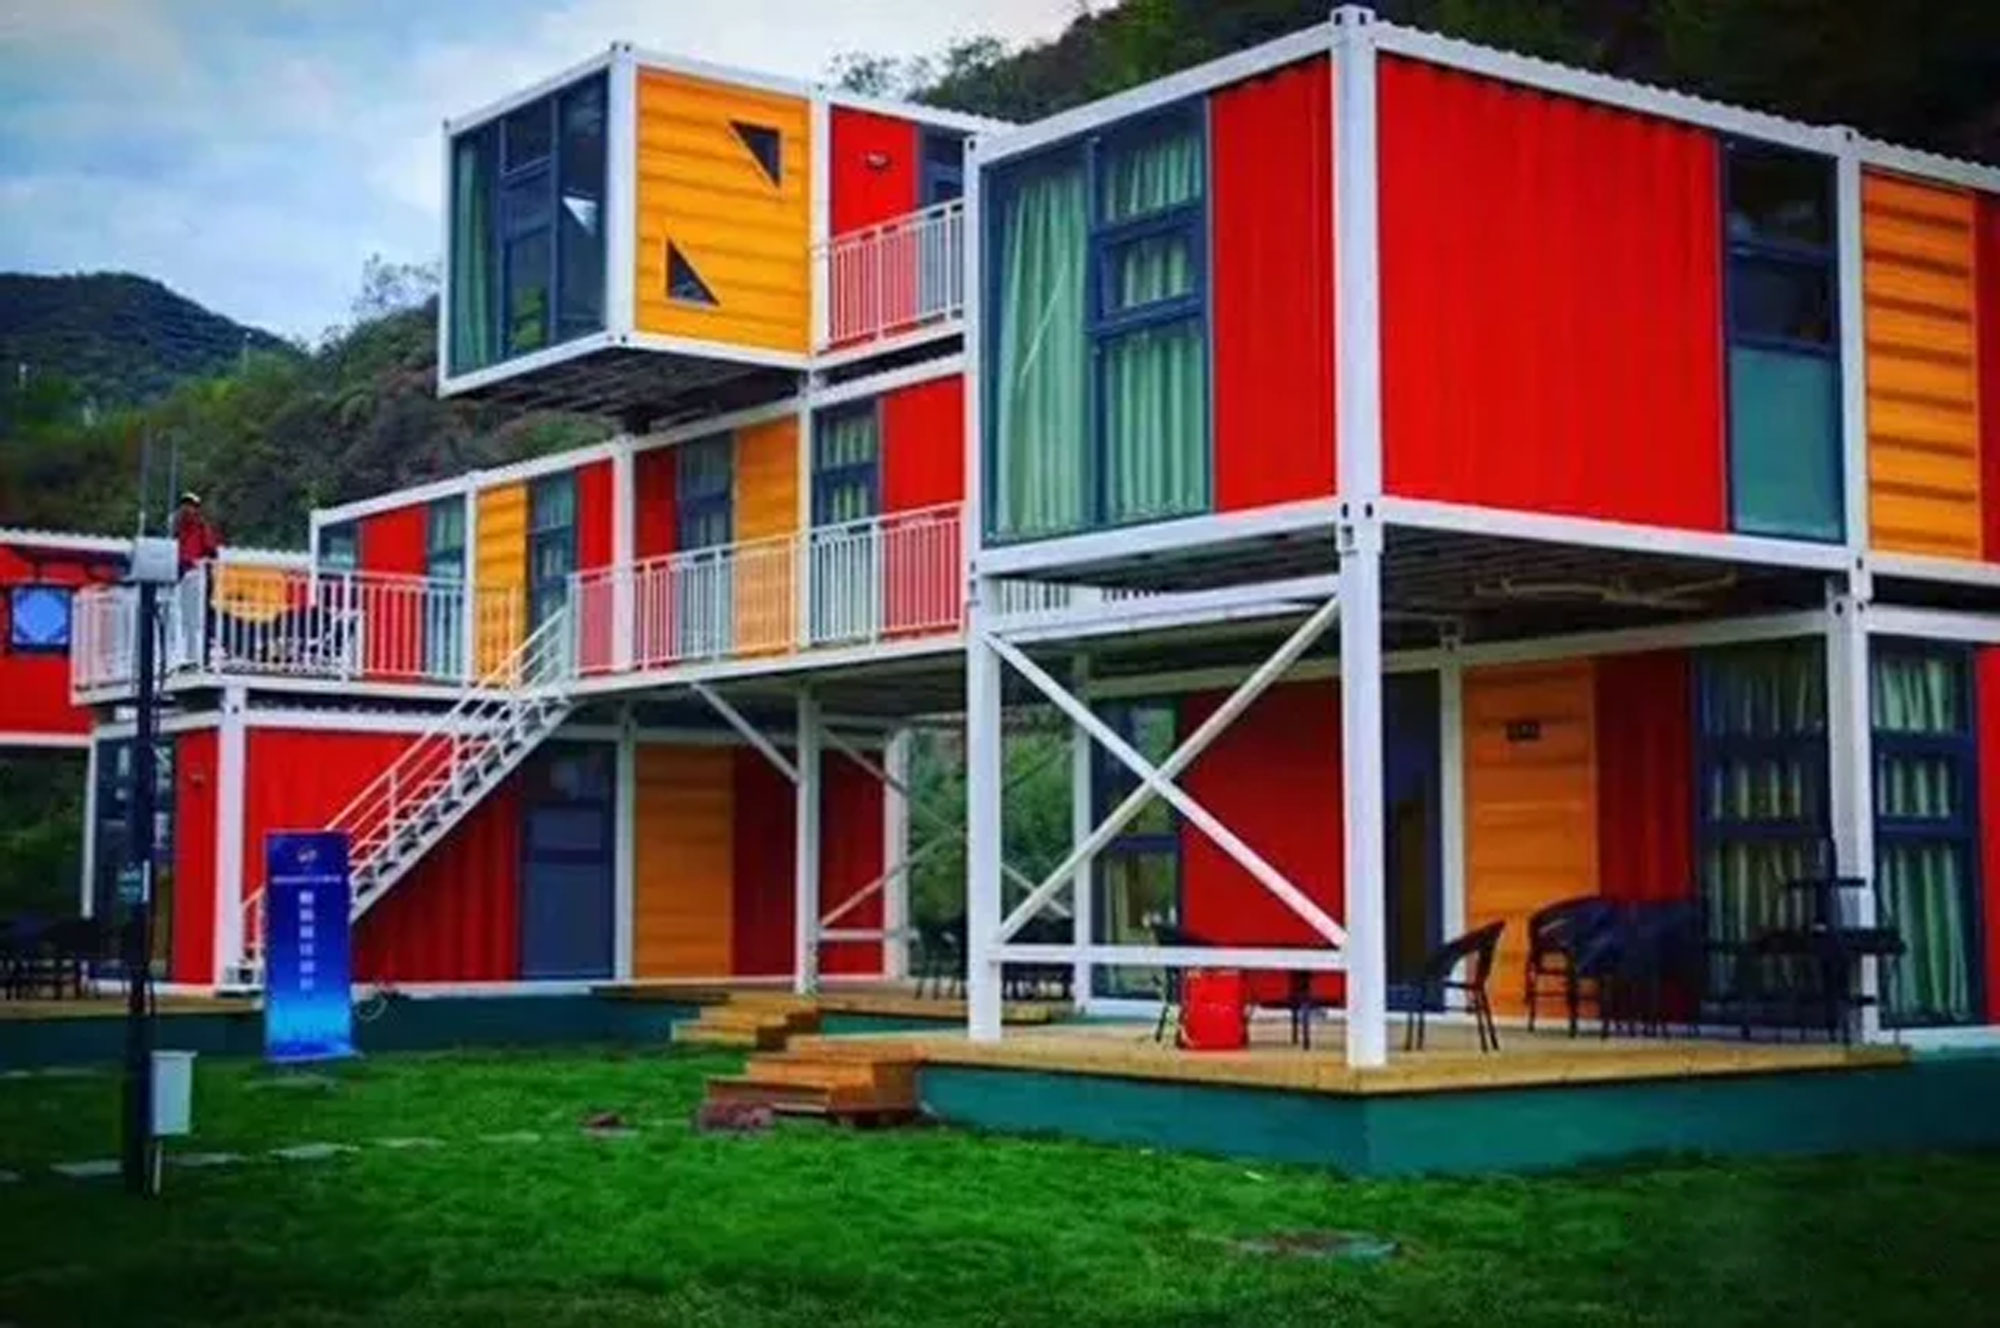 New style Minshuku, made by modular houses